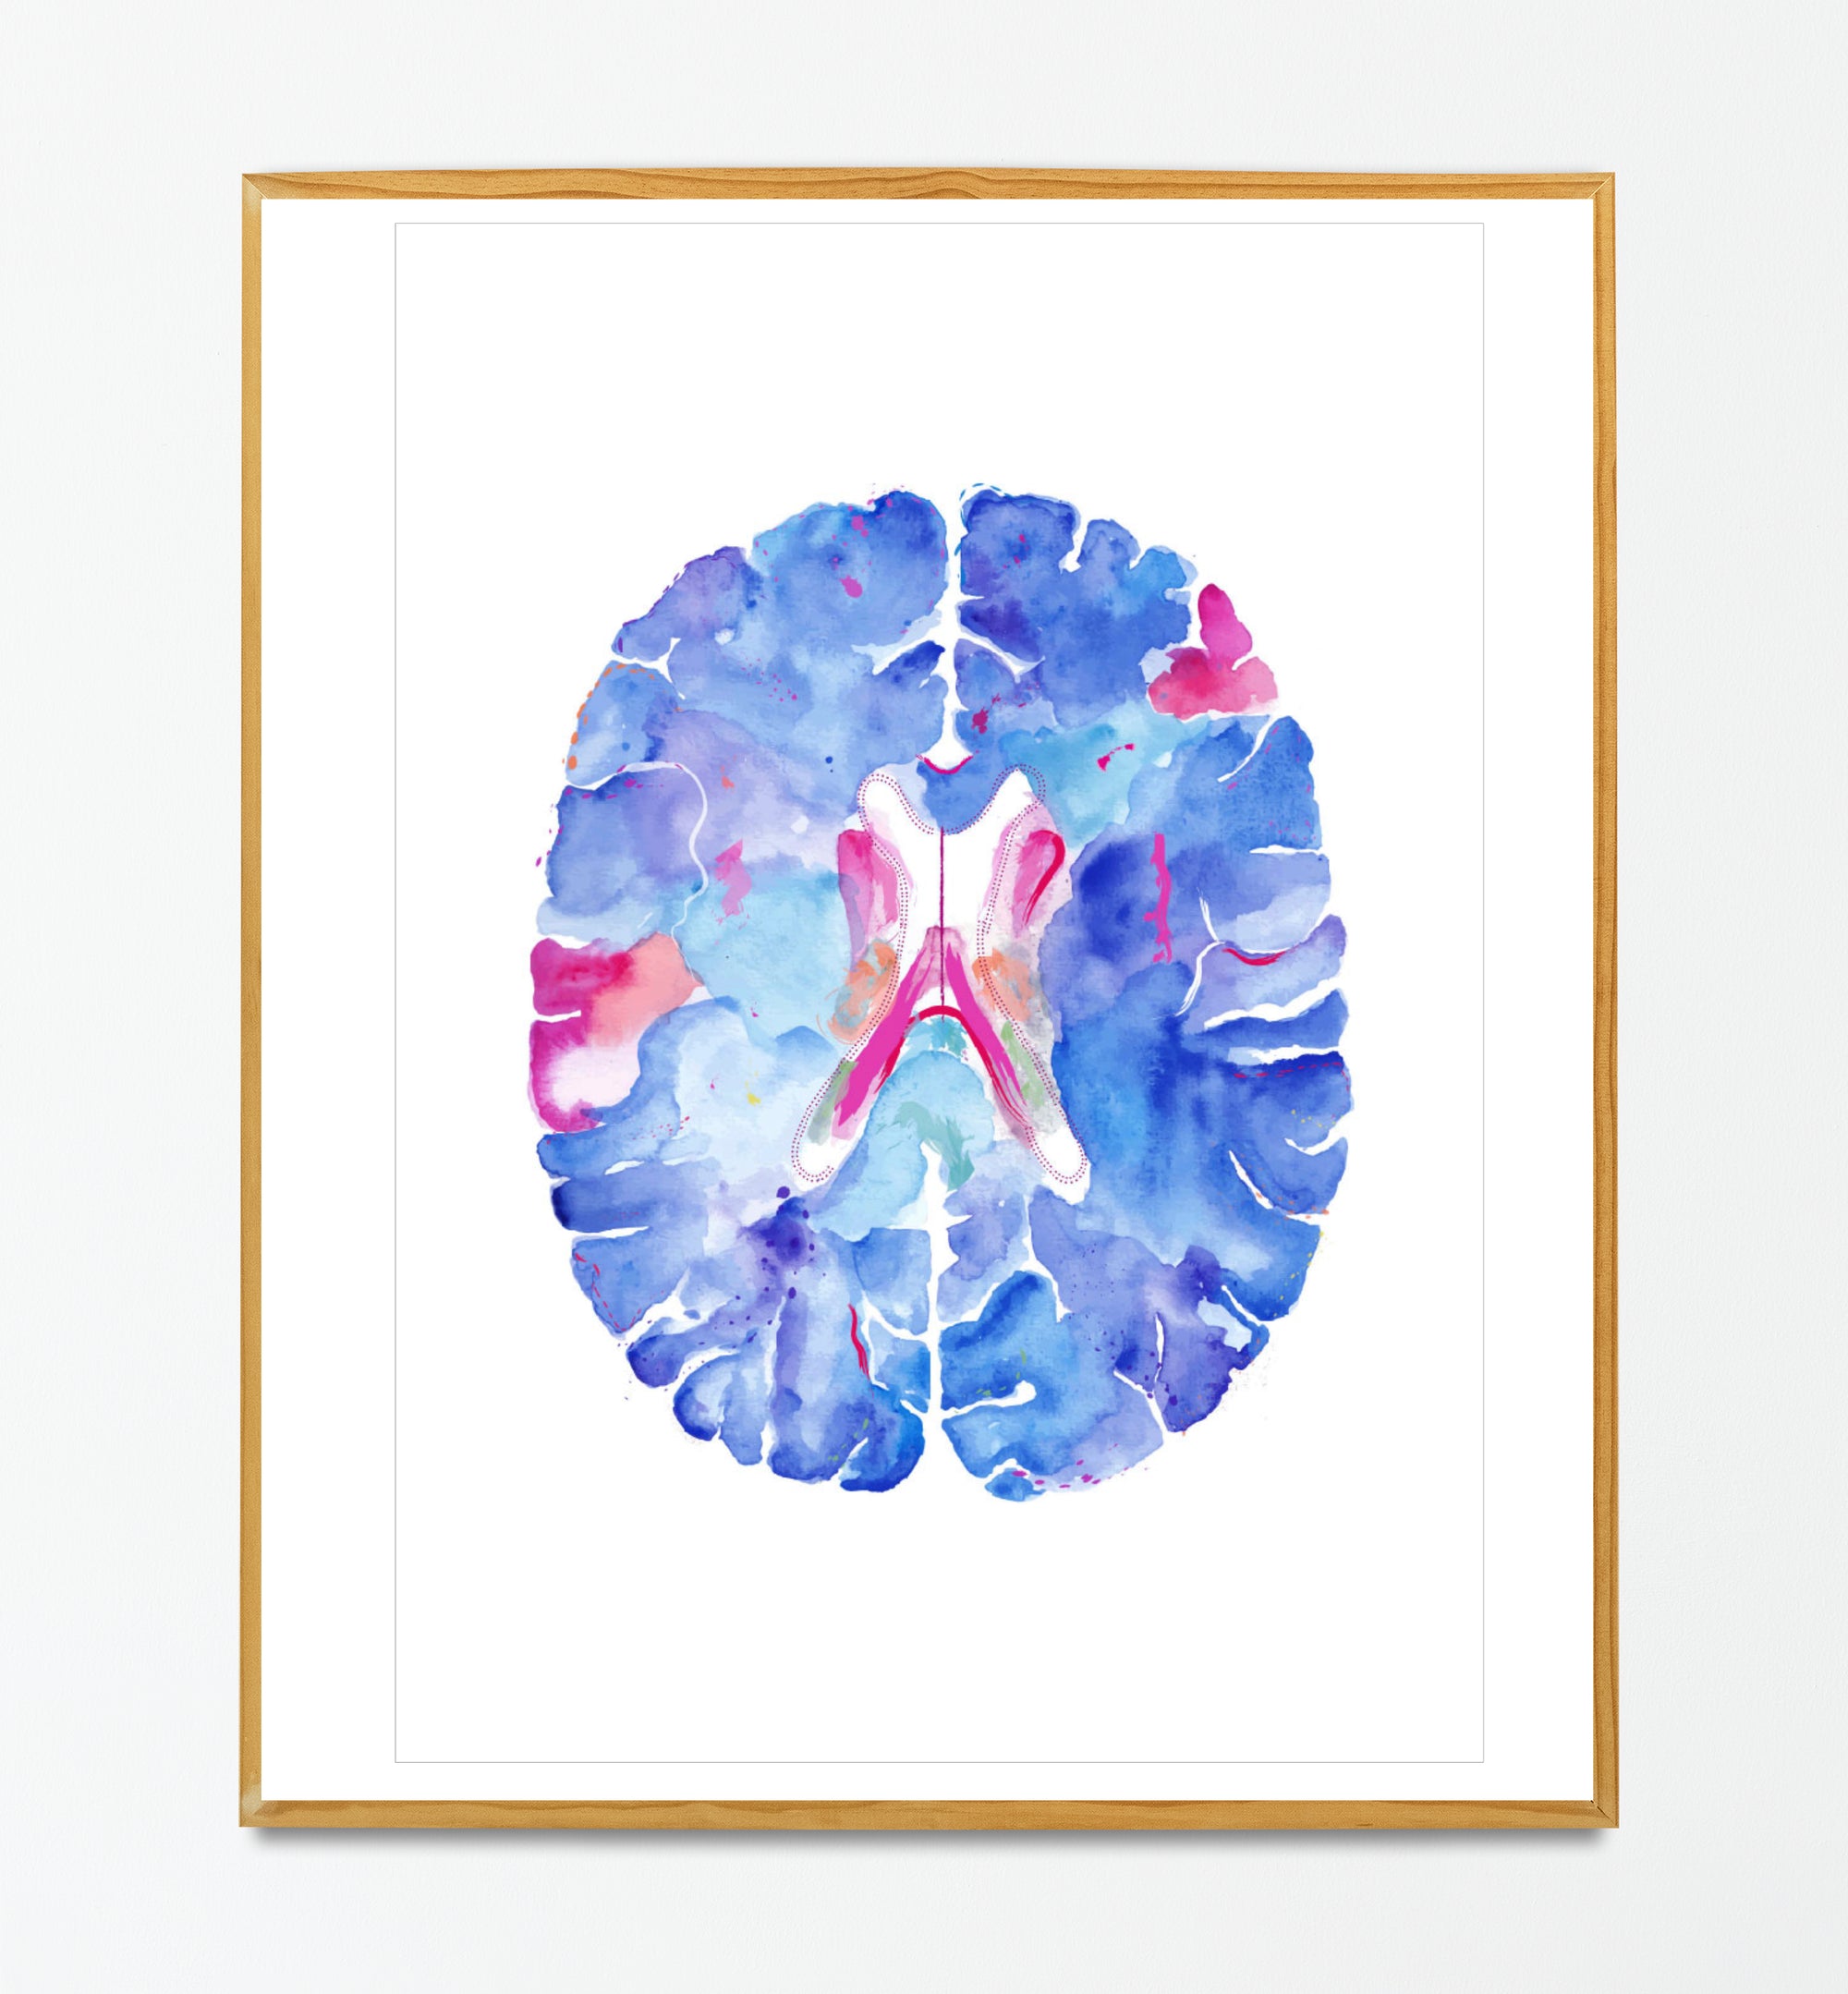 Brain Anatomy Art, Neuroscience Art, Neurologist Gift